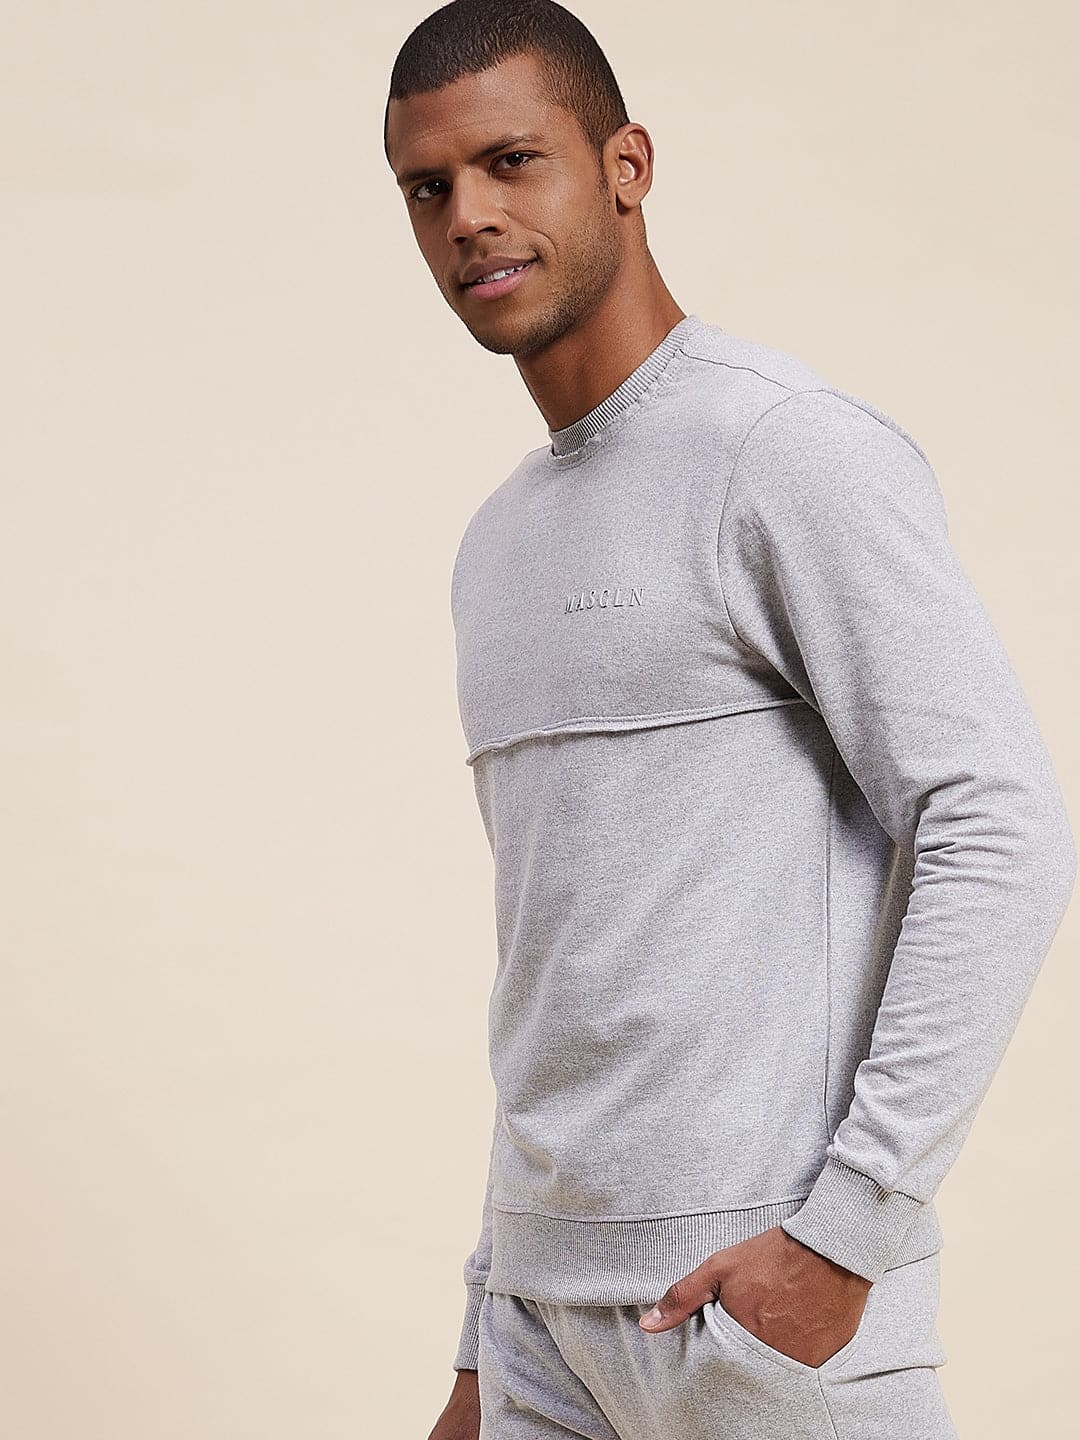 Men's Grey MASCLN Puff Print Sweatshirt - LYUSH-MASCLN